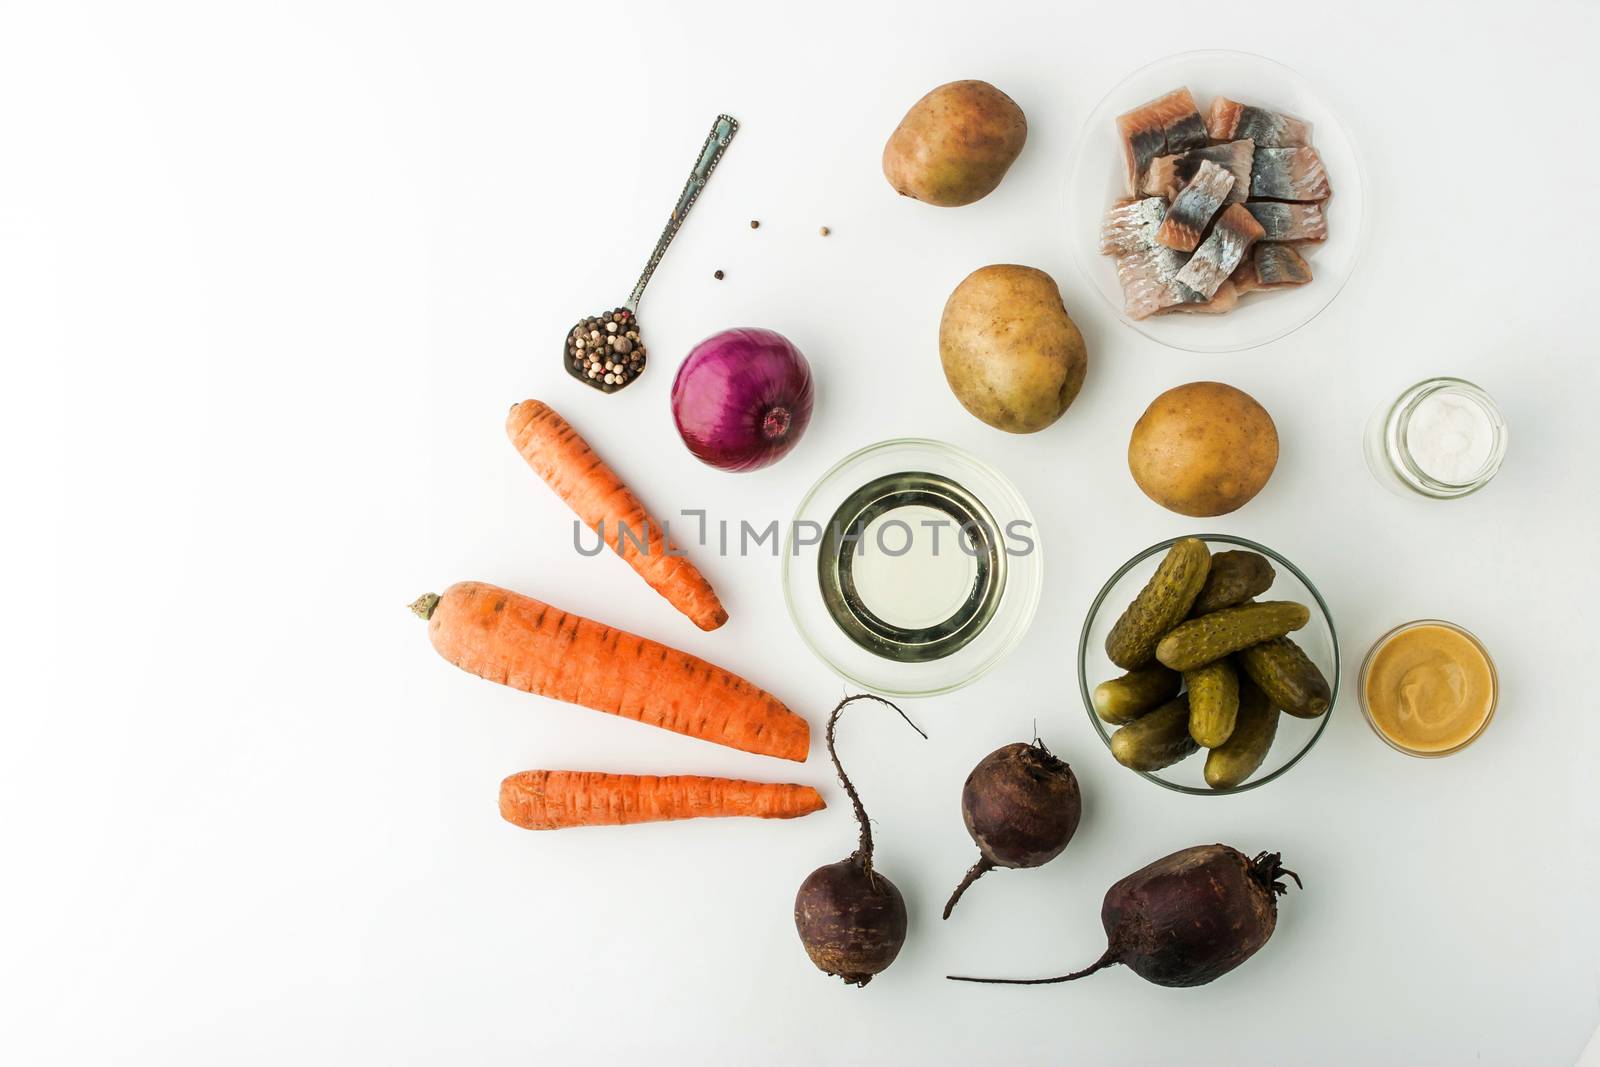 Ingredients for vegetable salad by Deniskarpenkov